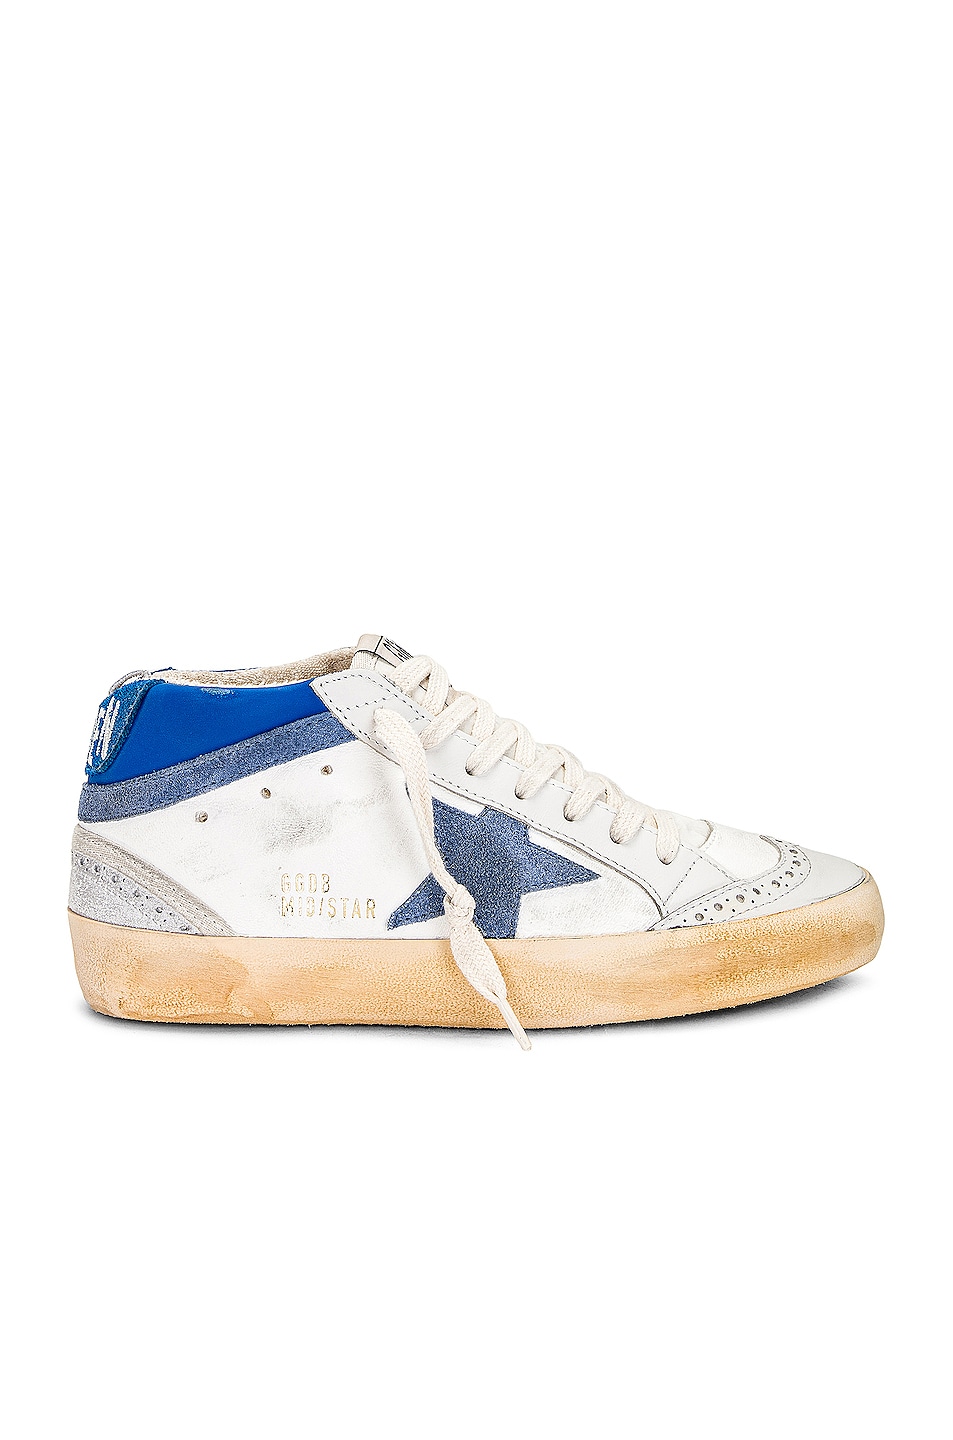 Image 1 of Golden Goose Mid Star Sneaker in Cream, Blue, & Powder